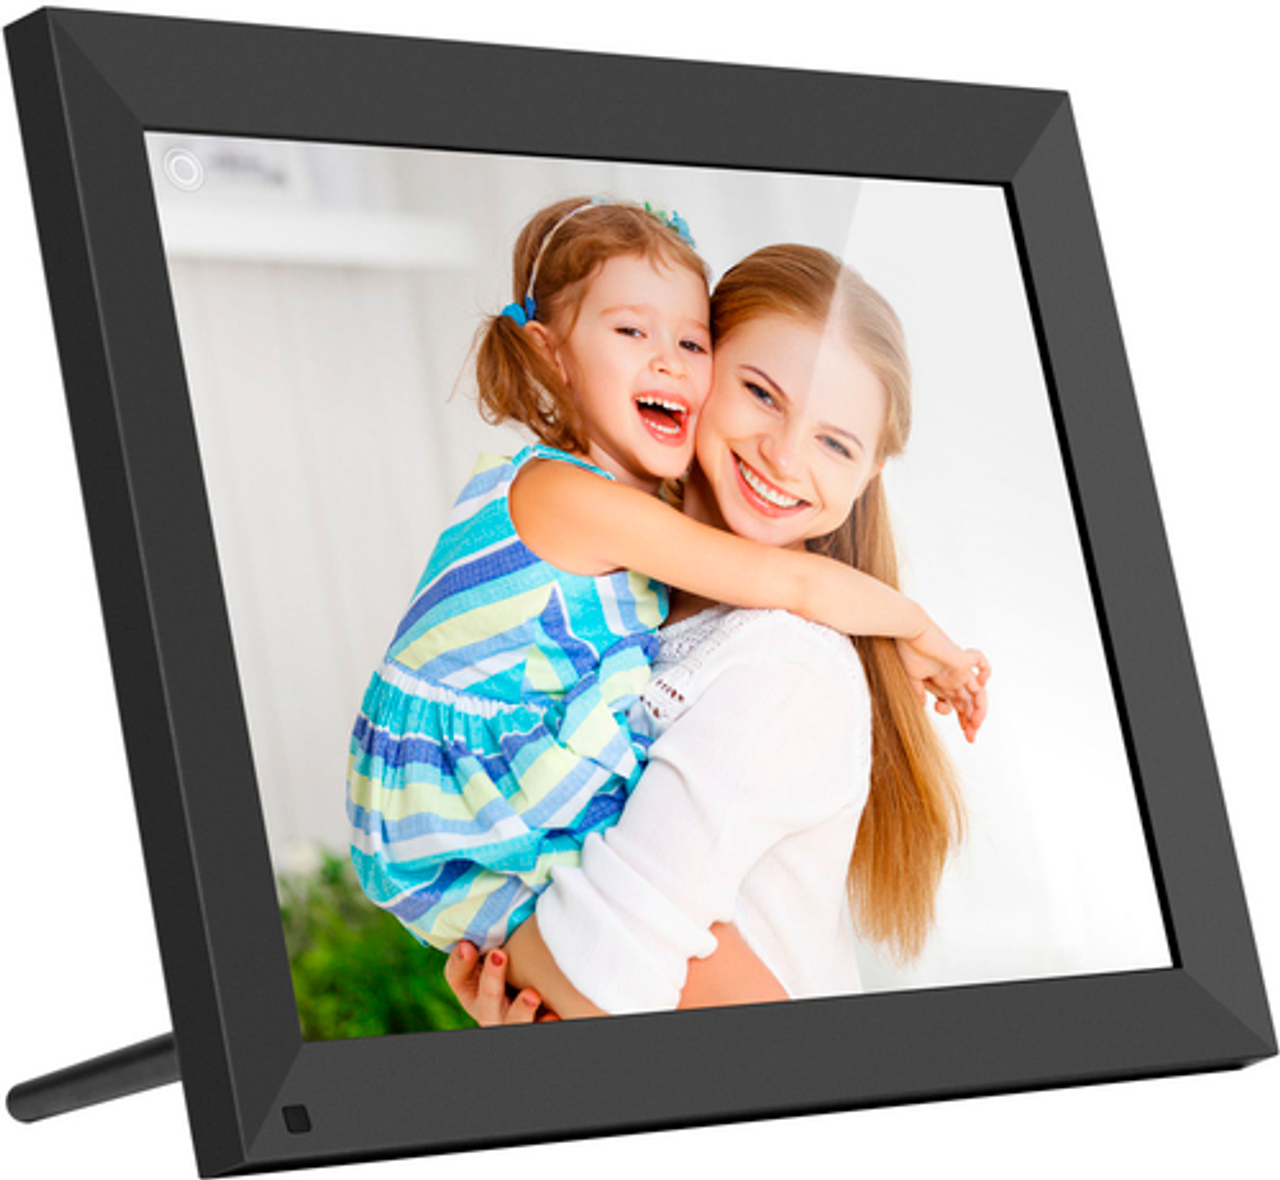 Aluratek - 15" Touchscreen LCD WiFi Digital Photo Frame w/ 32GB Built-in Memory - Black